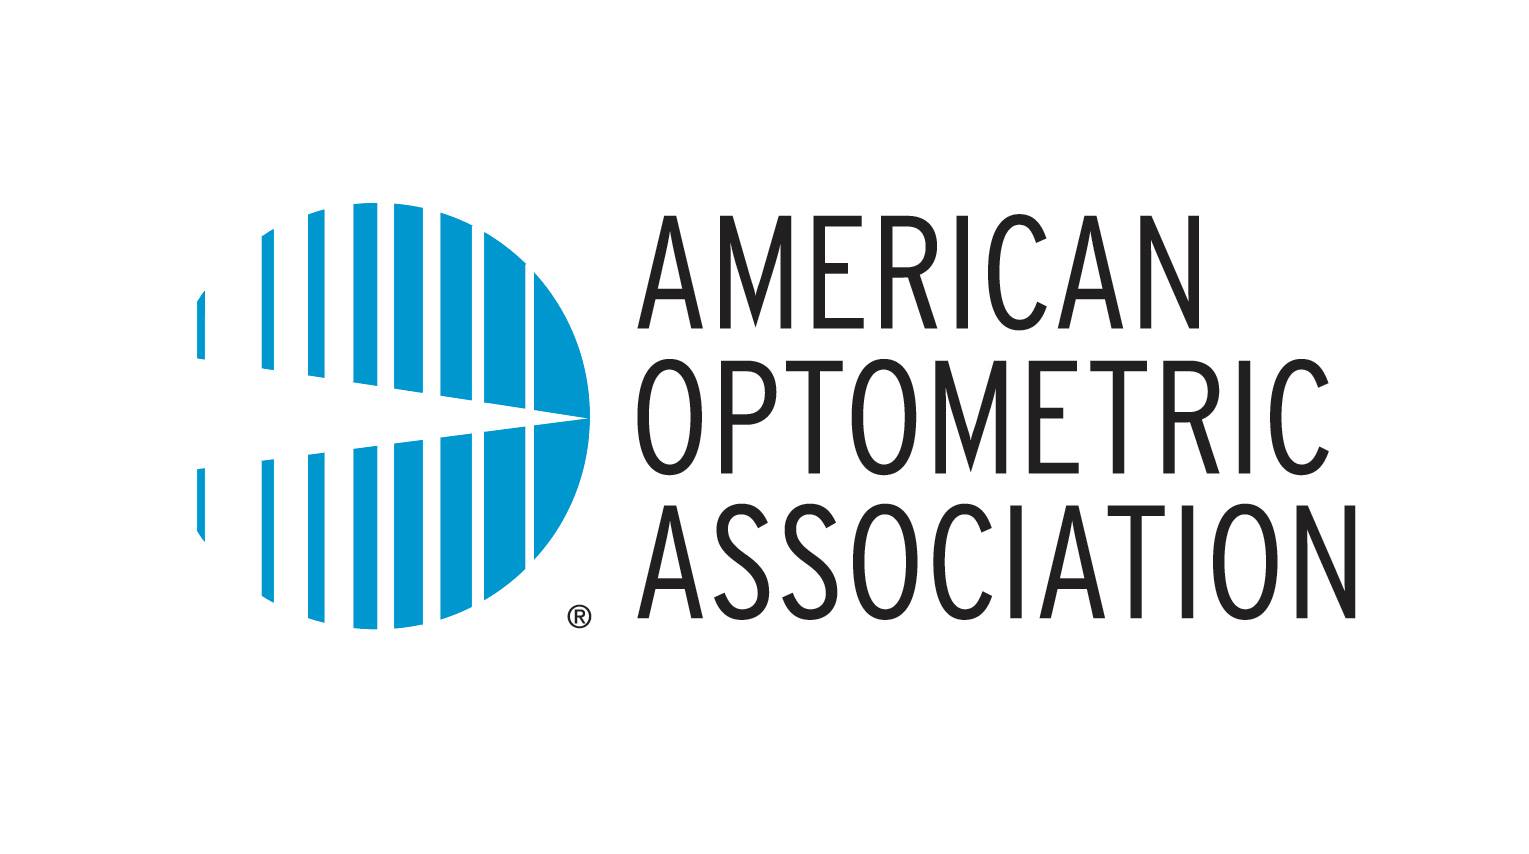 American Optometric Association - Professional Associations - JobStars USA